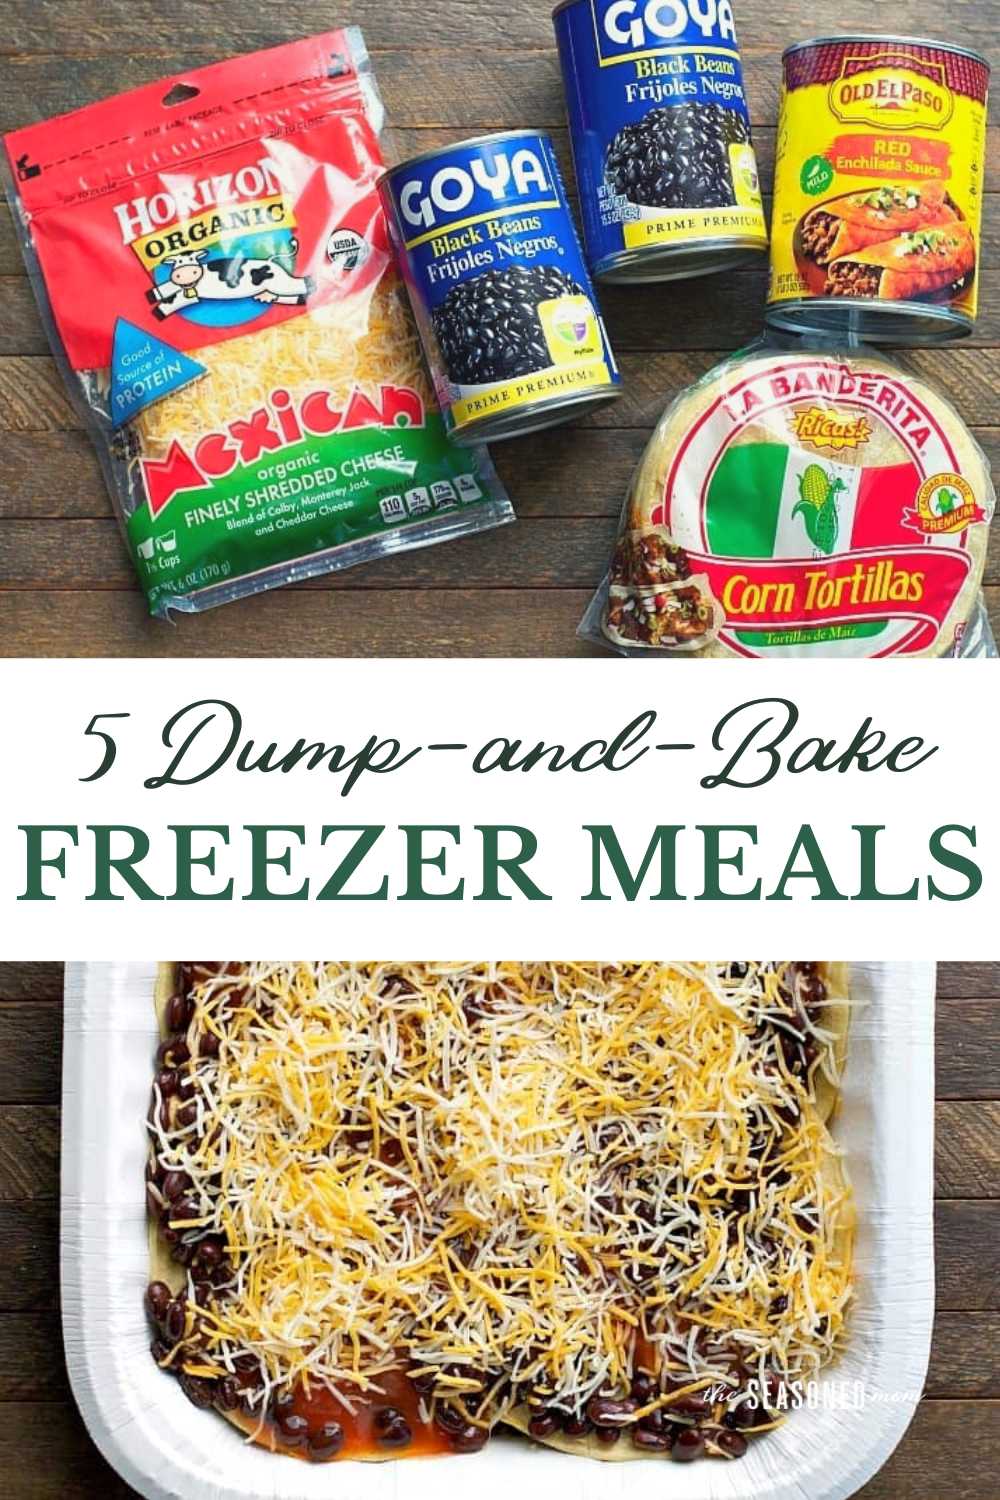 5 Dump-and-Bake Freezer Meals! - The Seasoned Mom